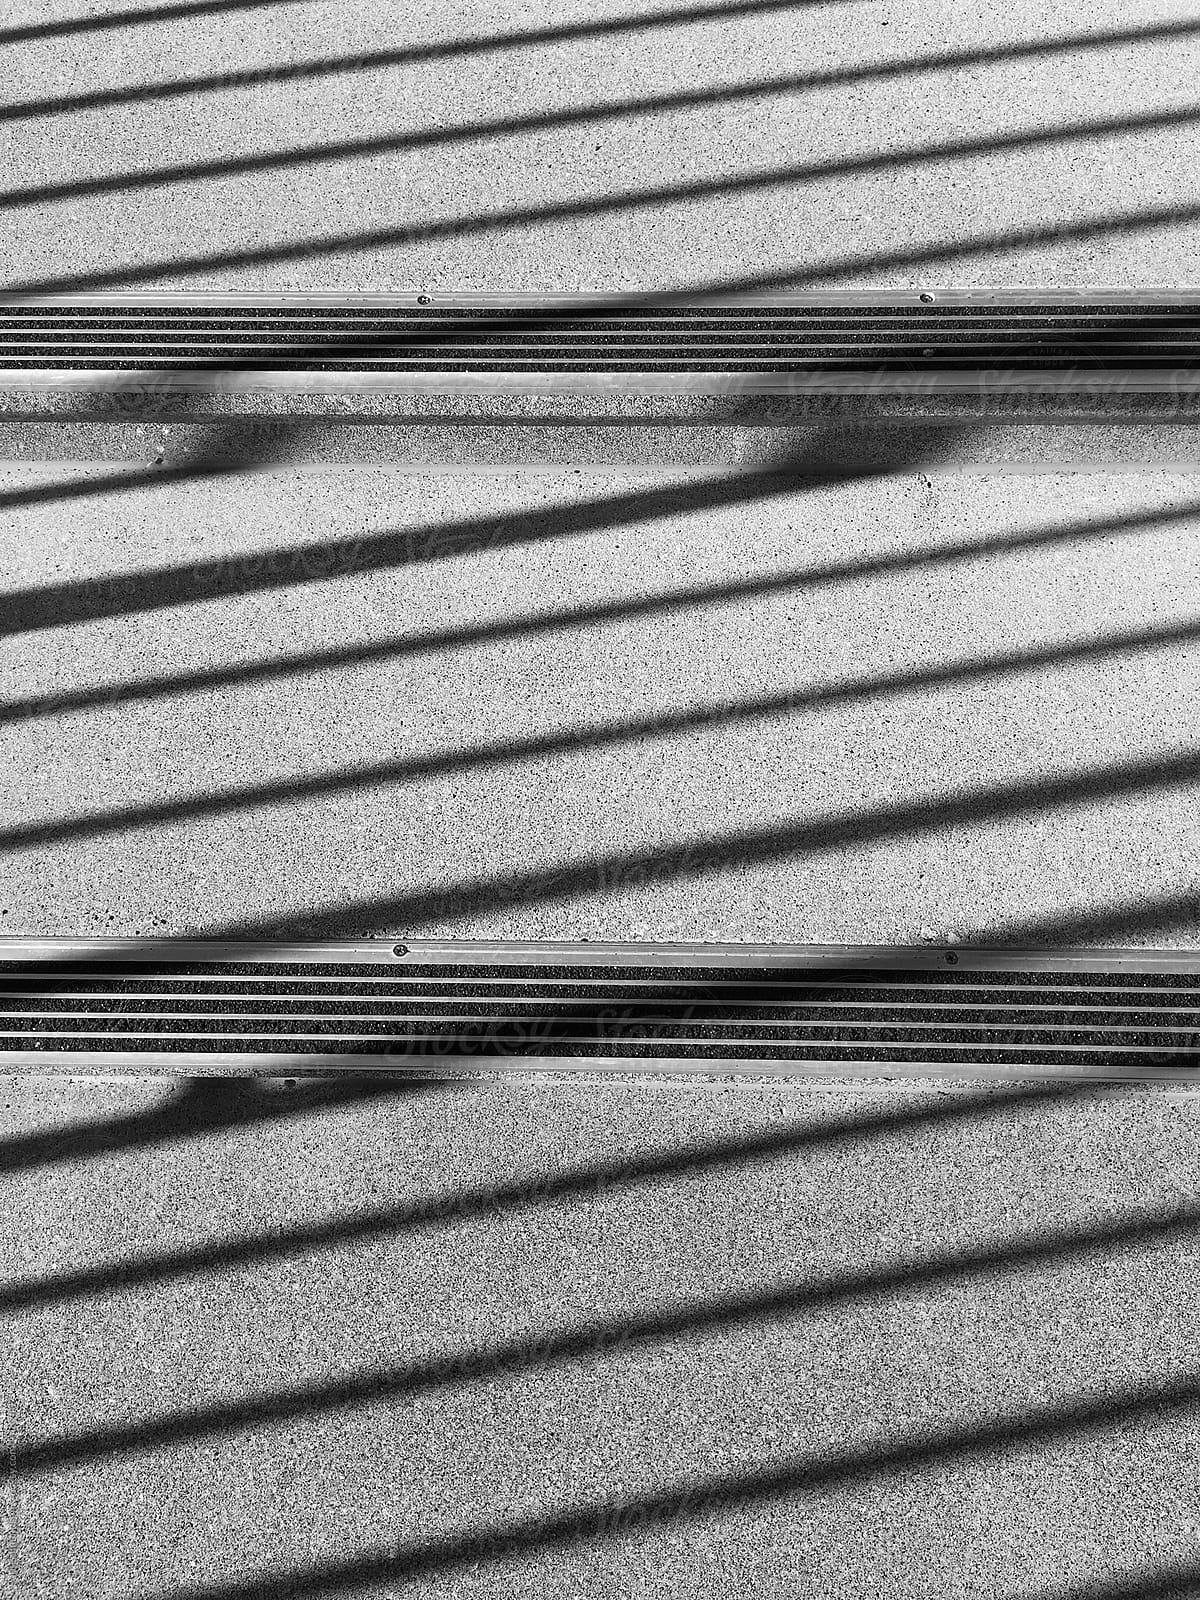 Modern concrete steps and shadows